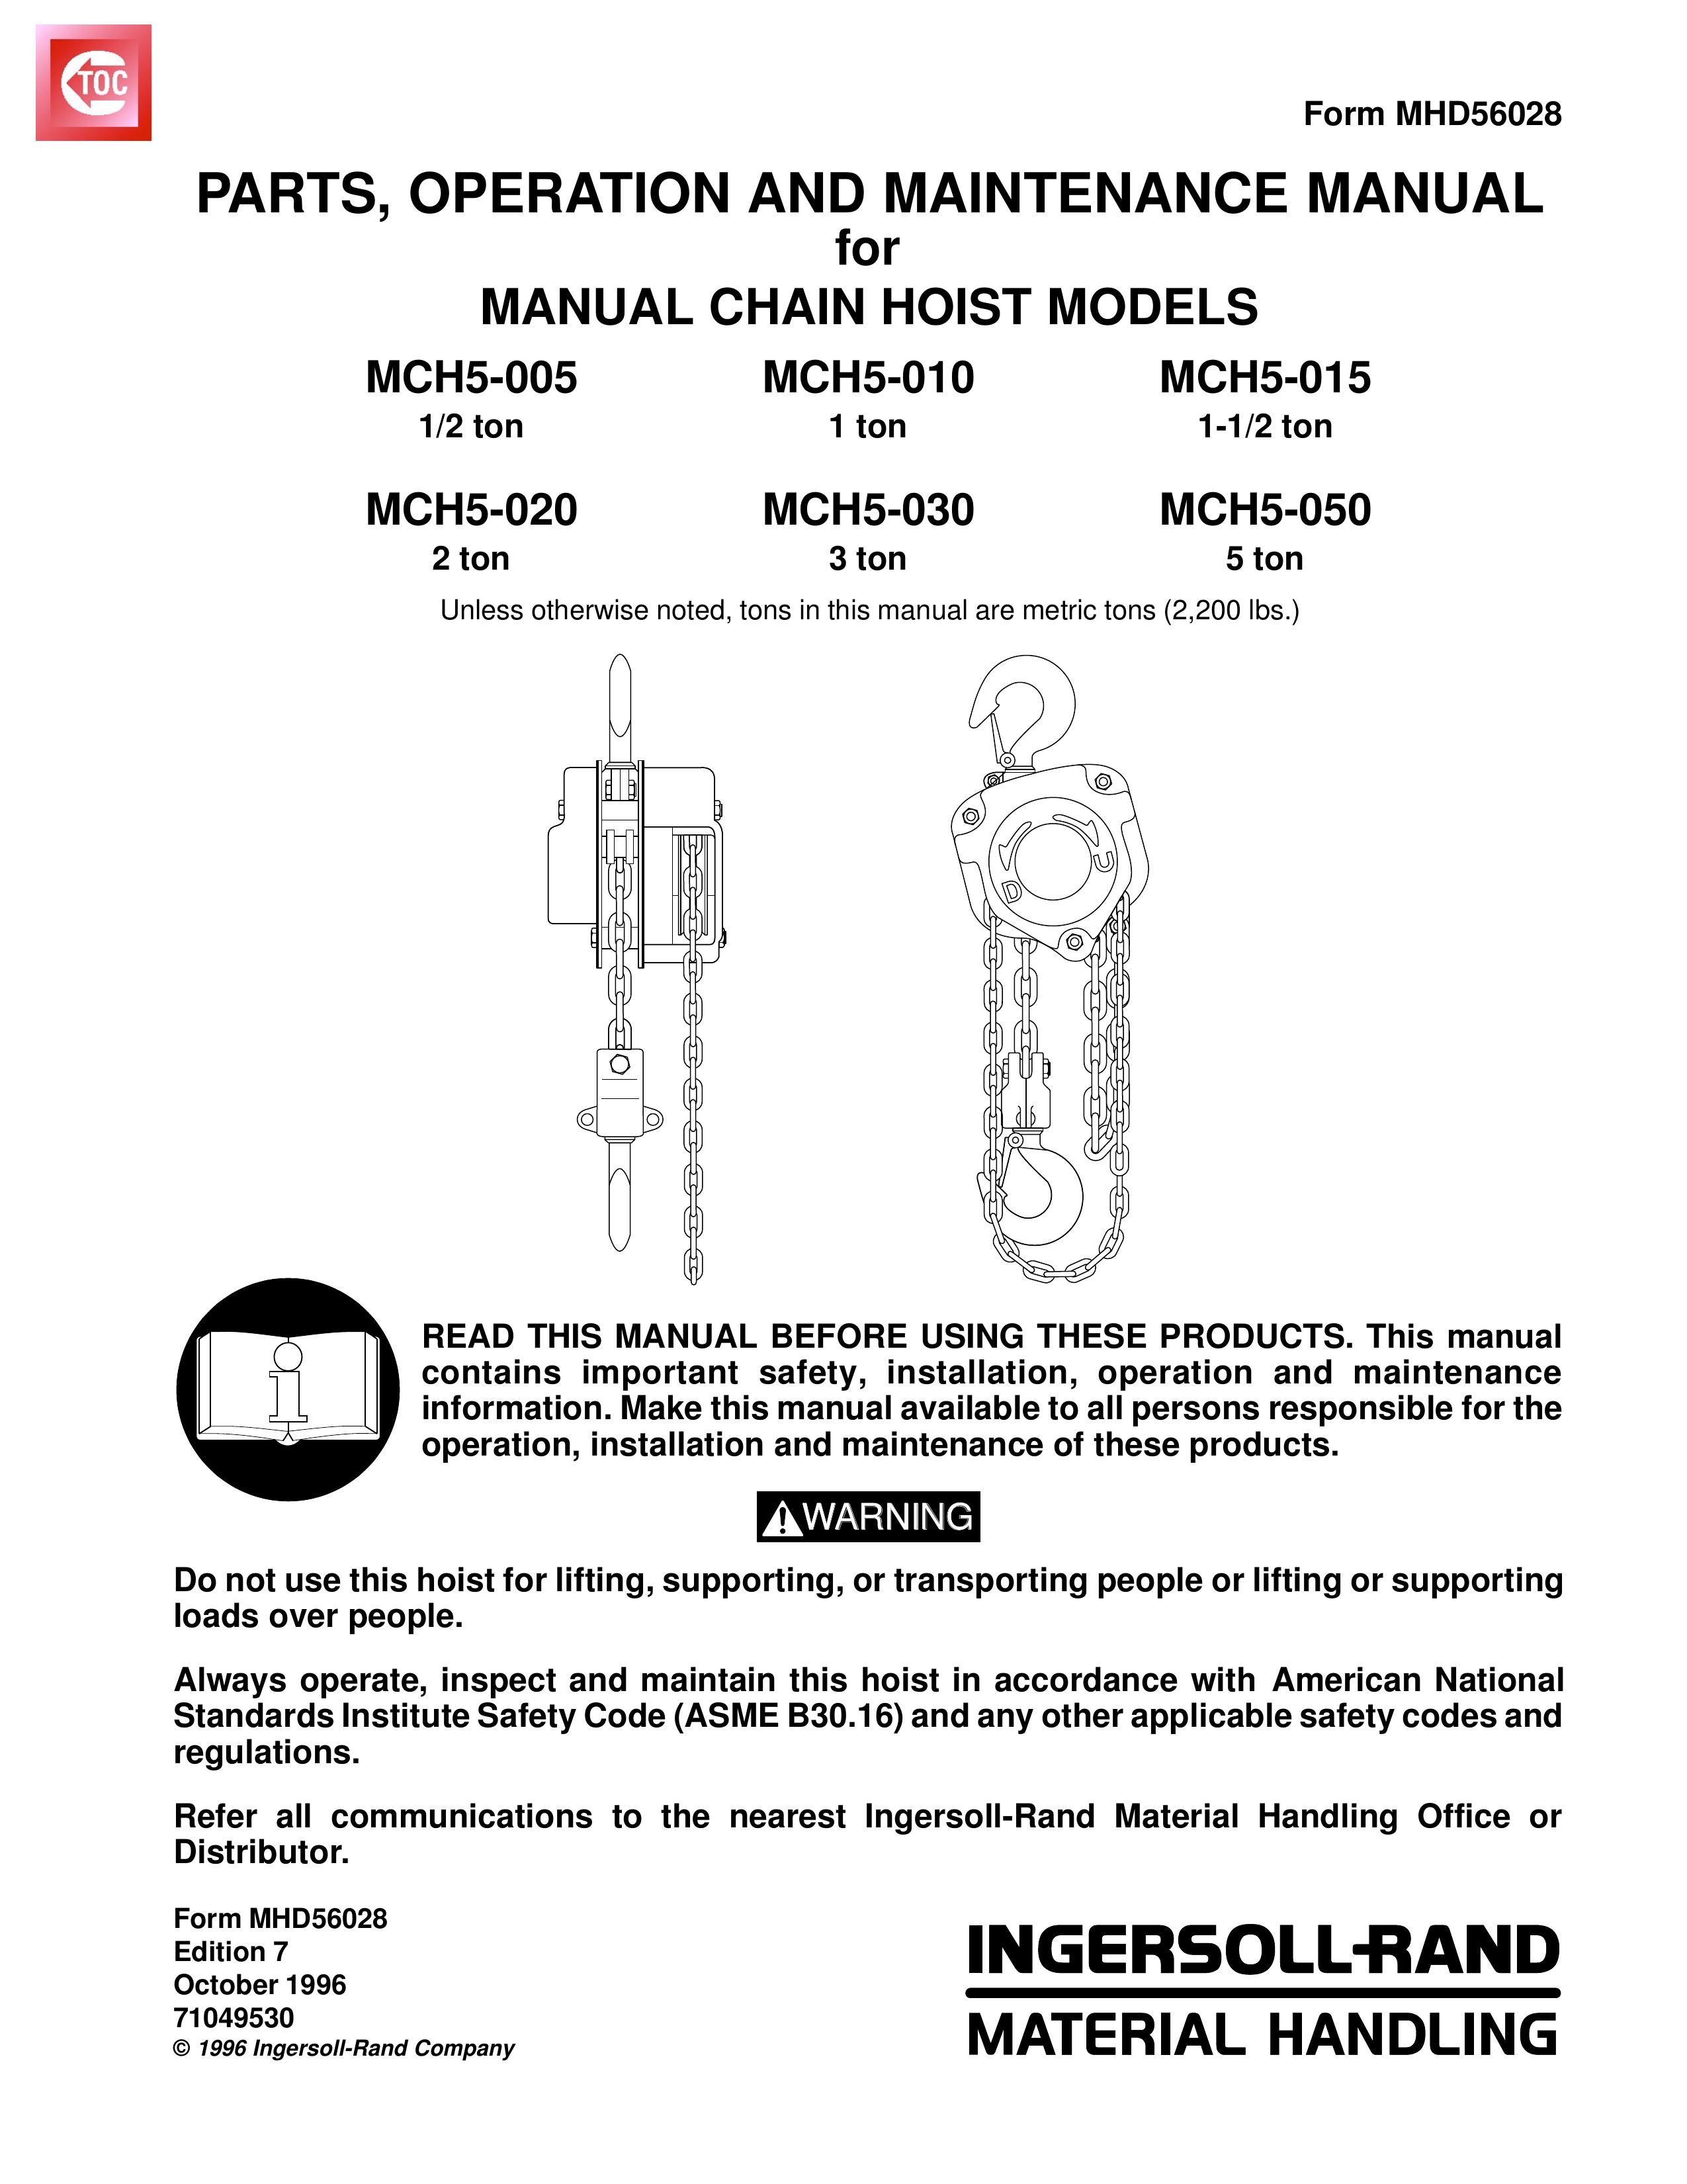 Ingersoll-Rand MCH5-030 Digital Photo Keychain User Manual